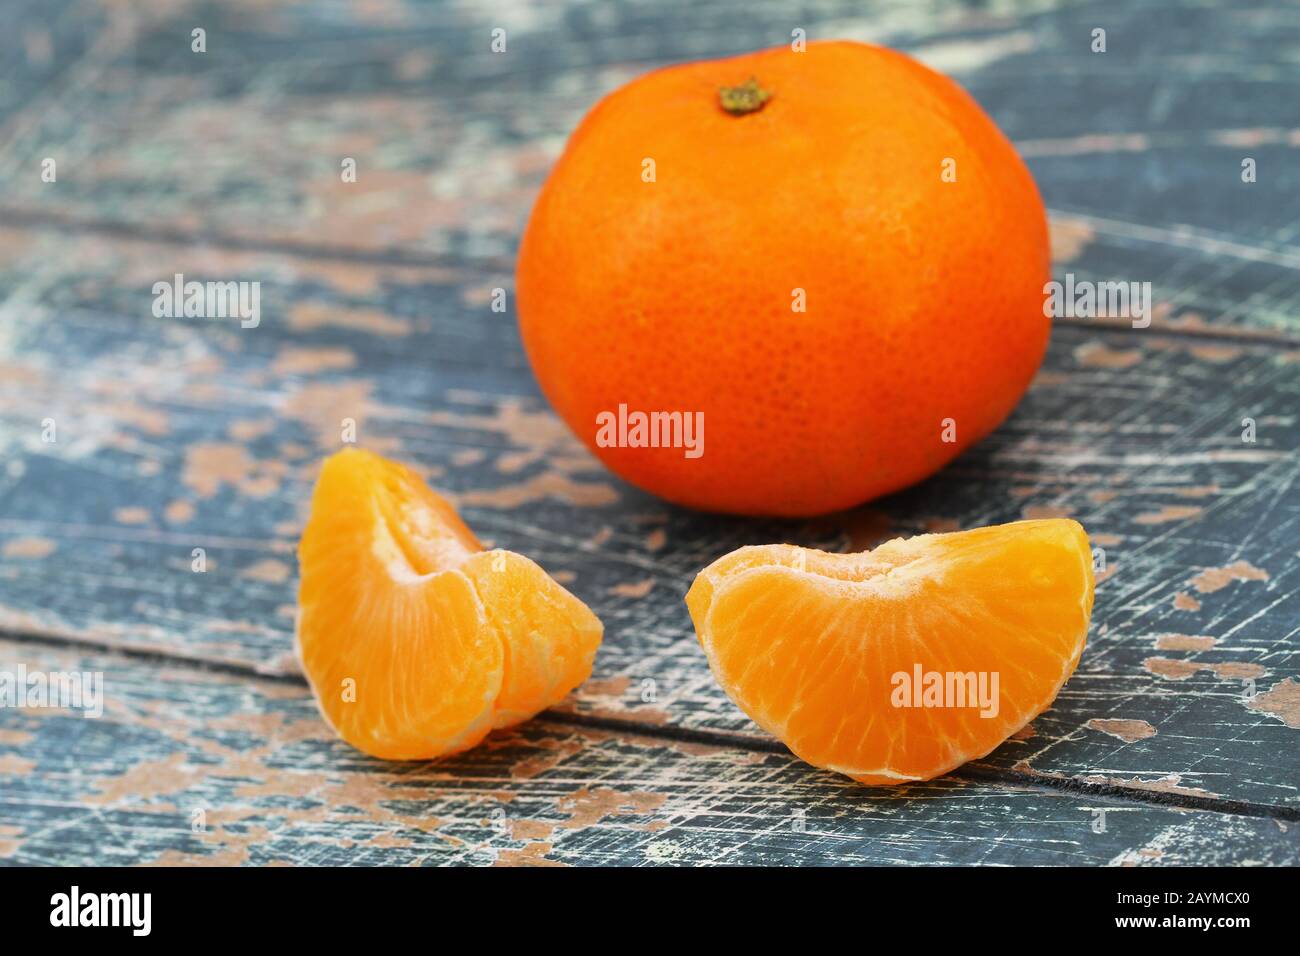 Piezas de mandarina pelada y mandarina entera sobre superficie rústica de madera Foto de stock